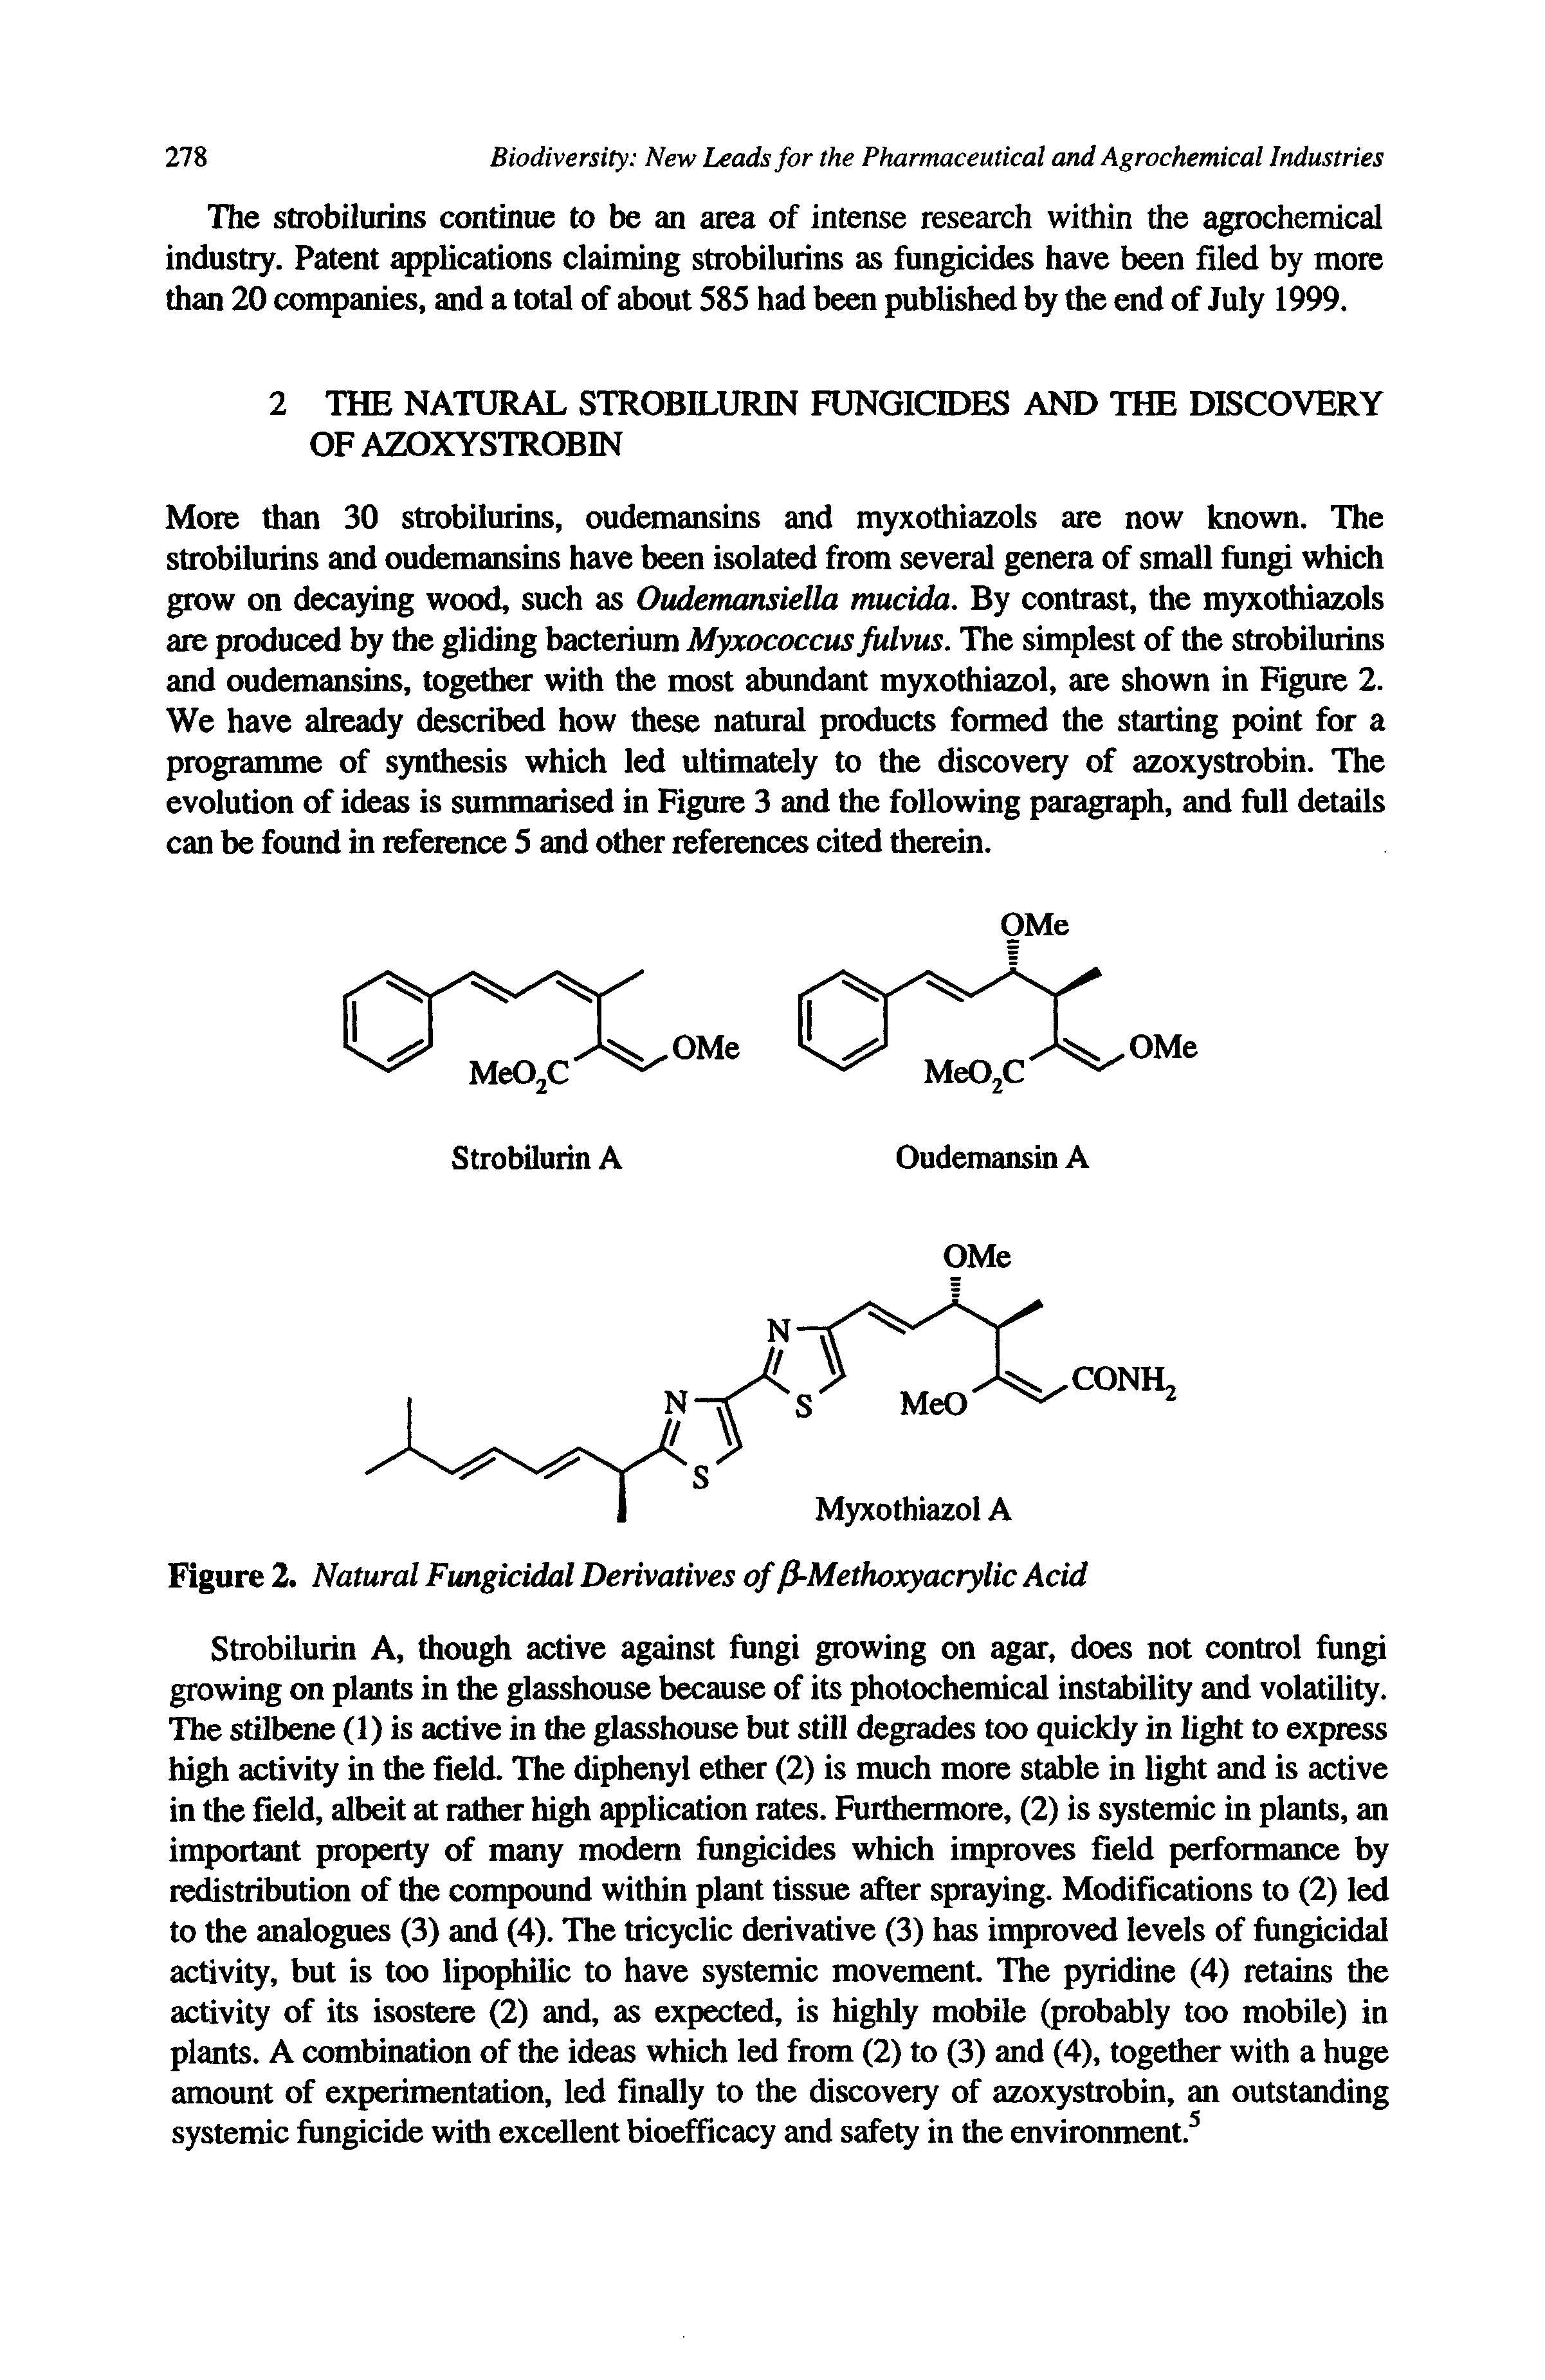 Figure 2. Natural Fungicidal Derivatives of p-Methoxyacrylic Acid...